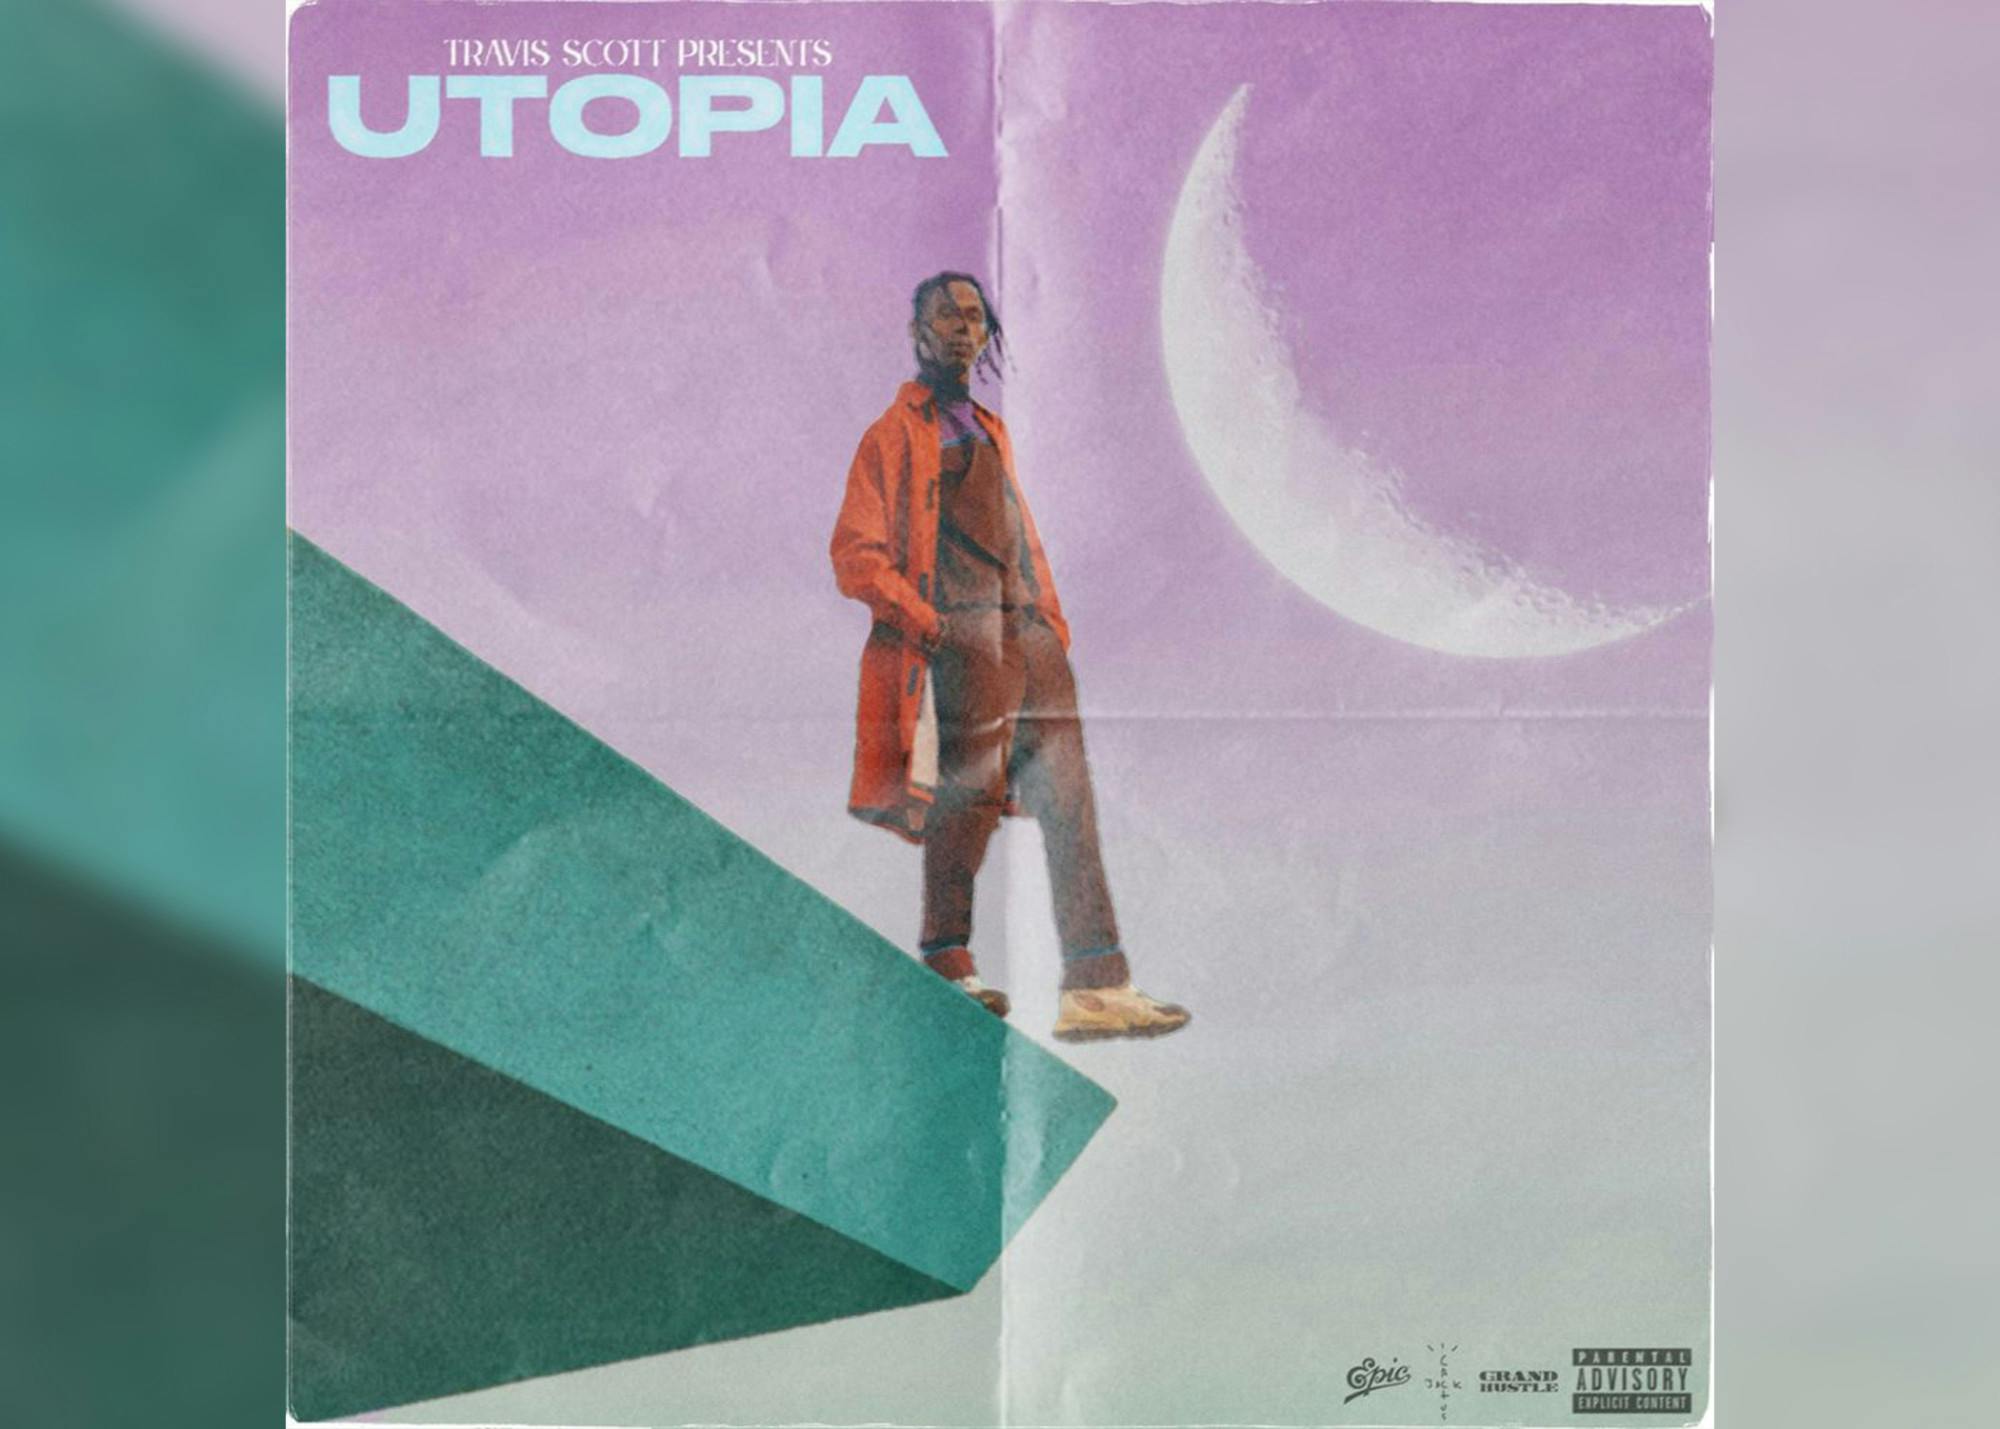 COLUMN: Travis Scott's “UTOPIA” is a smorgasbord of rap and pop